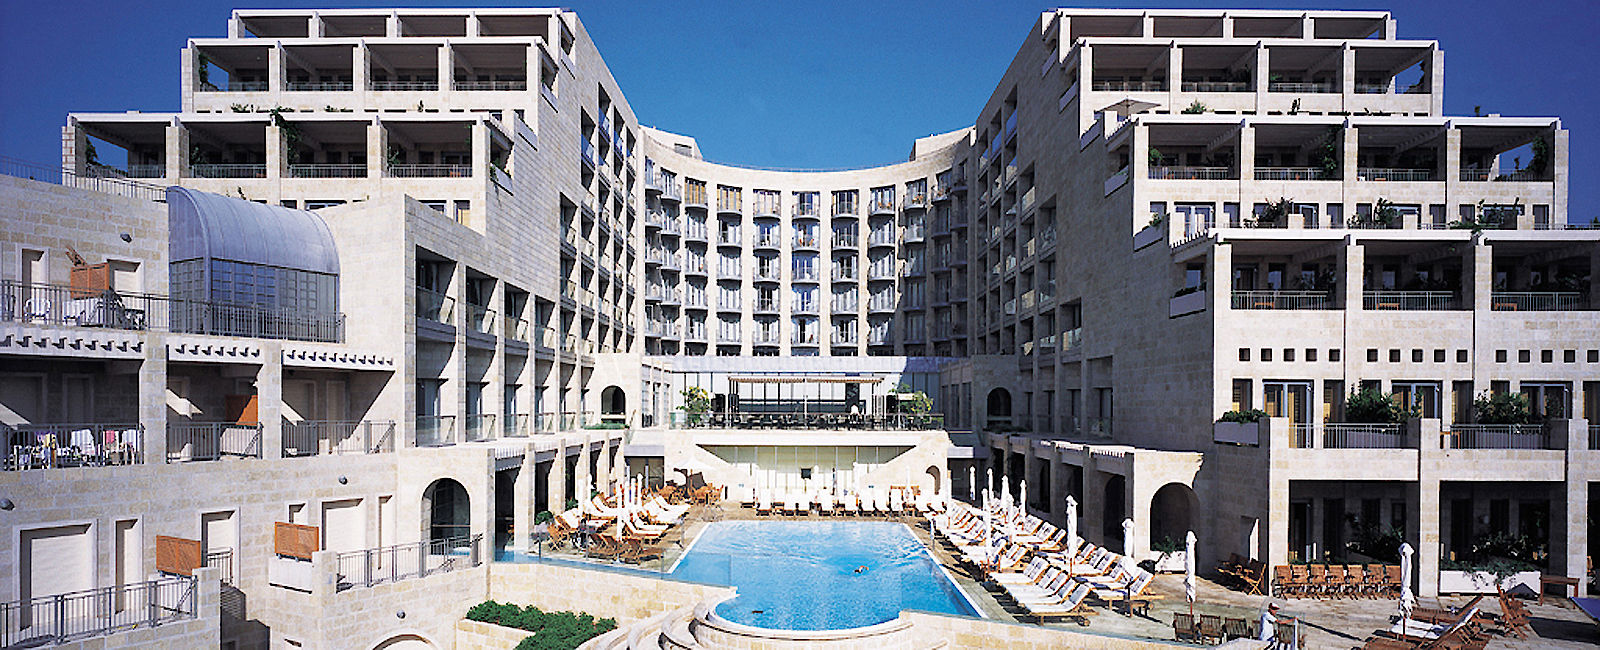 HOTEL TIPPS
 The David Citadel Hotel 
 Exquisites Design-Hotel mit schönem Panoramablick 